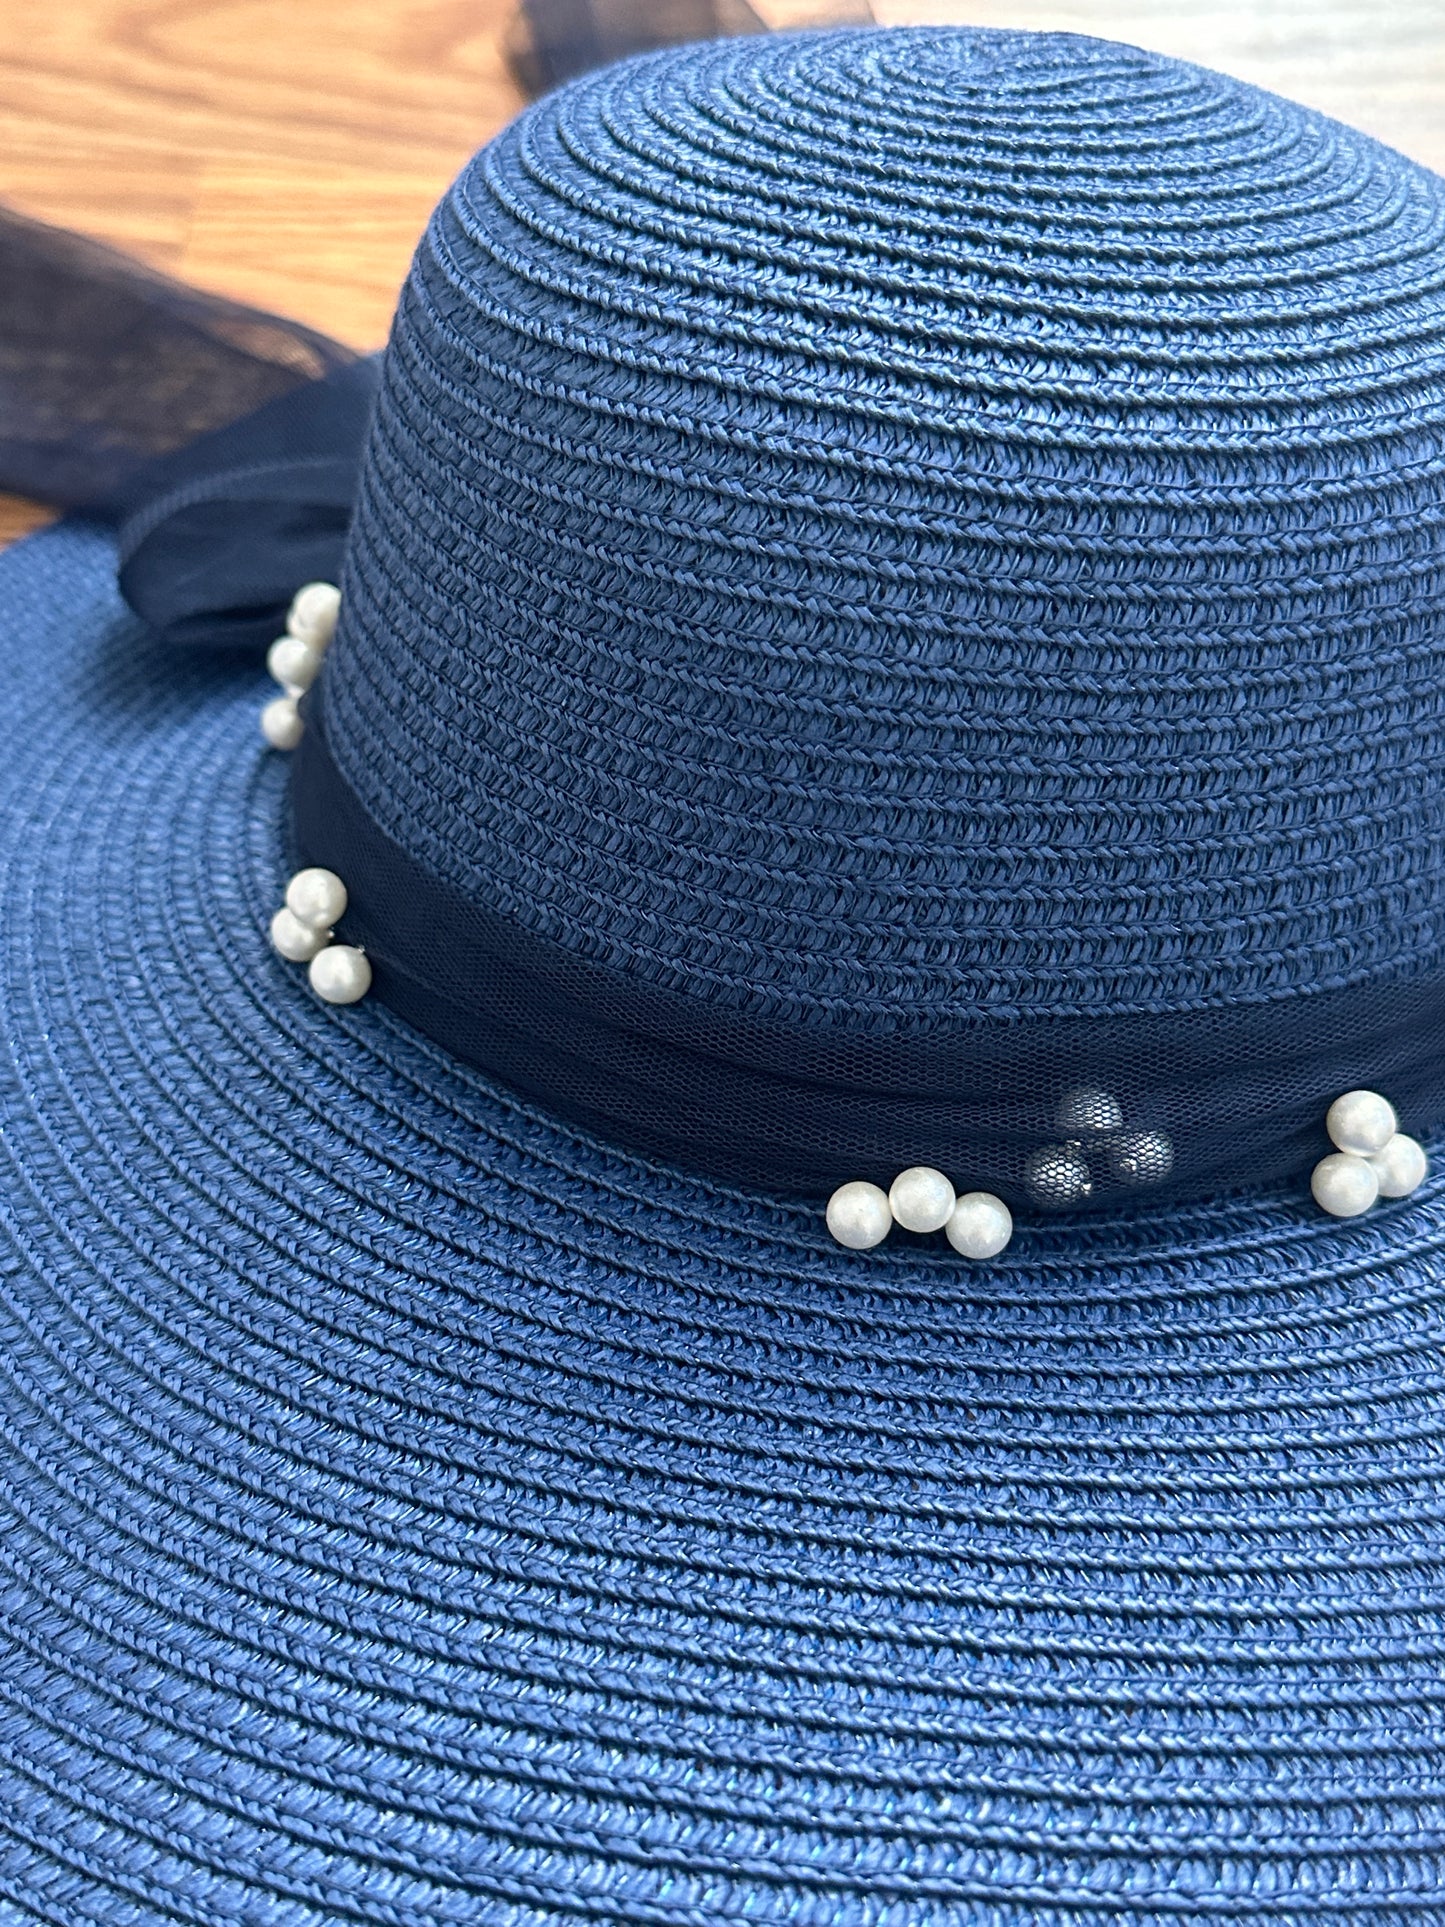 GLYNIS' CLOSET Pearl Embellished Ribbon Band Straw Sun Hat - blue